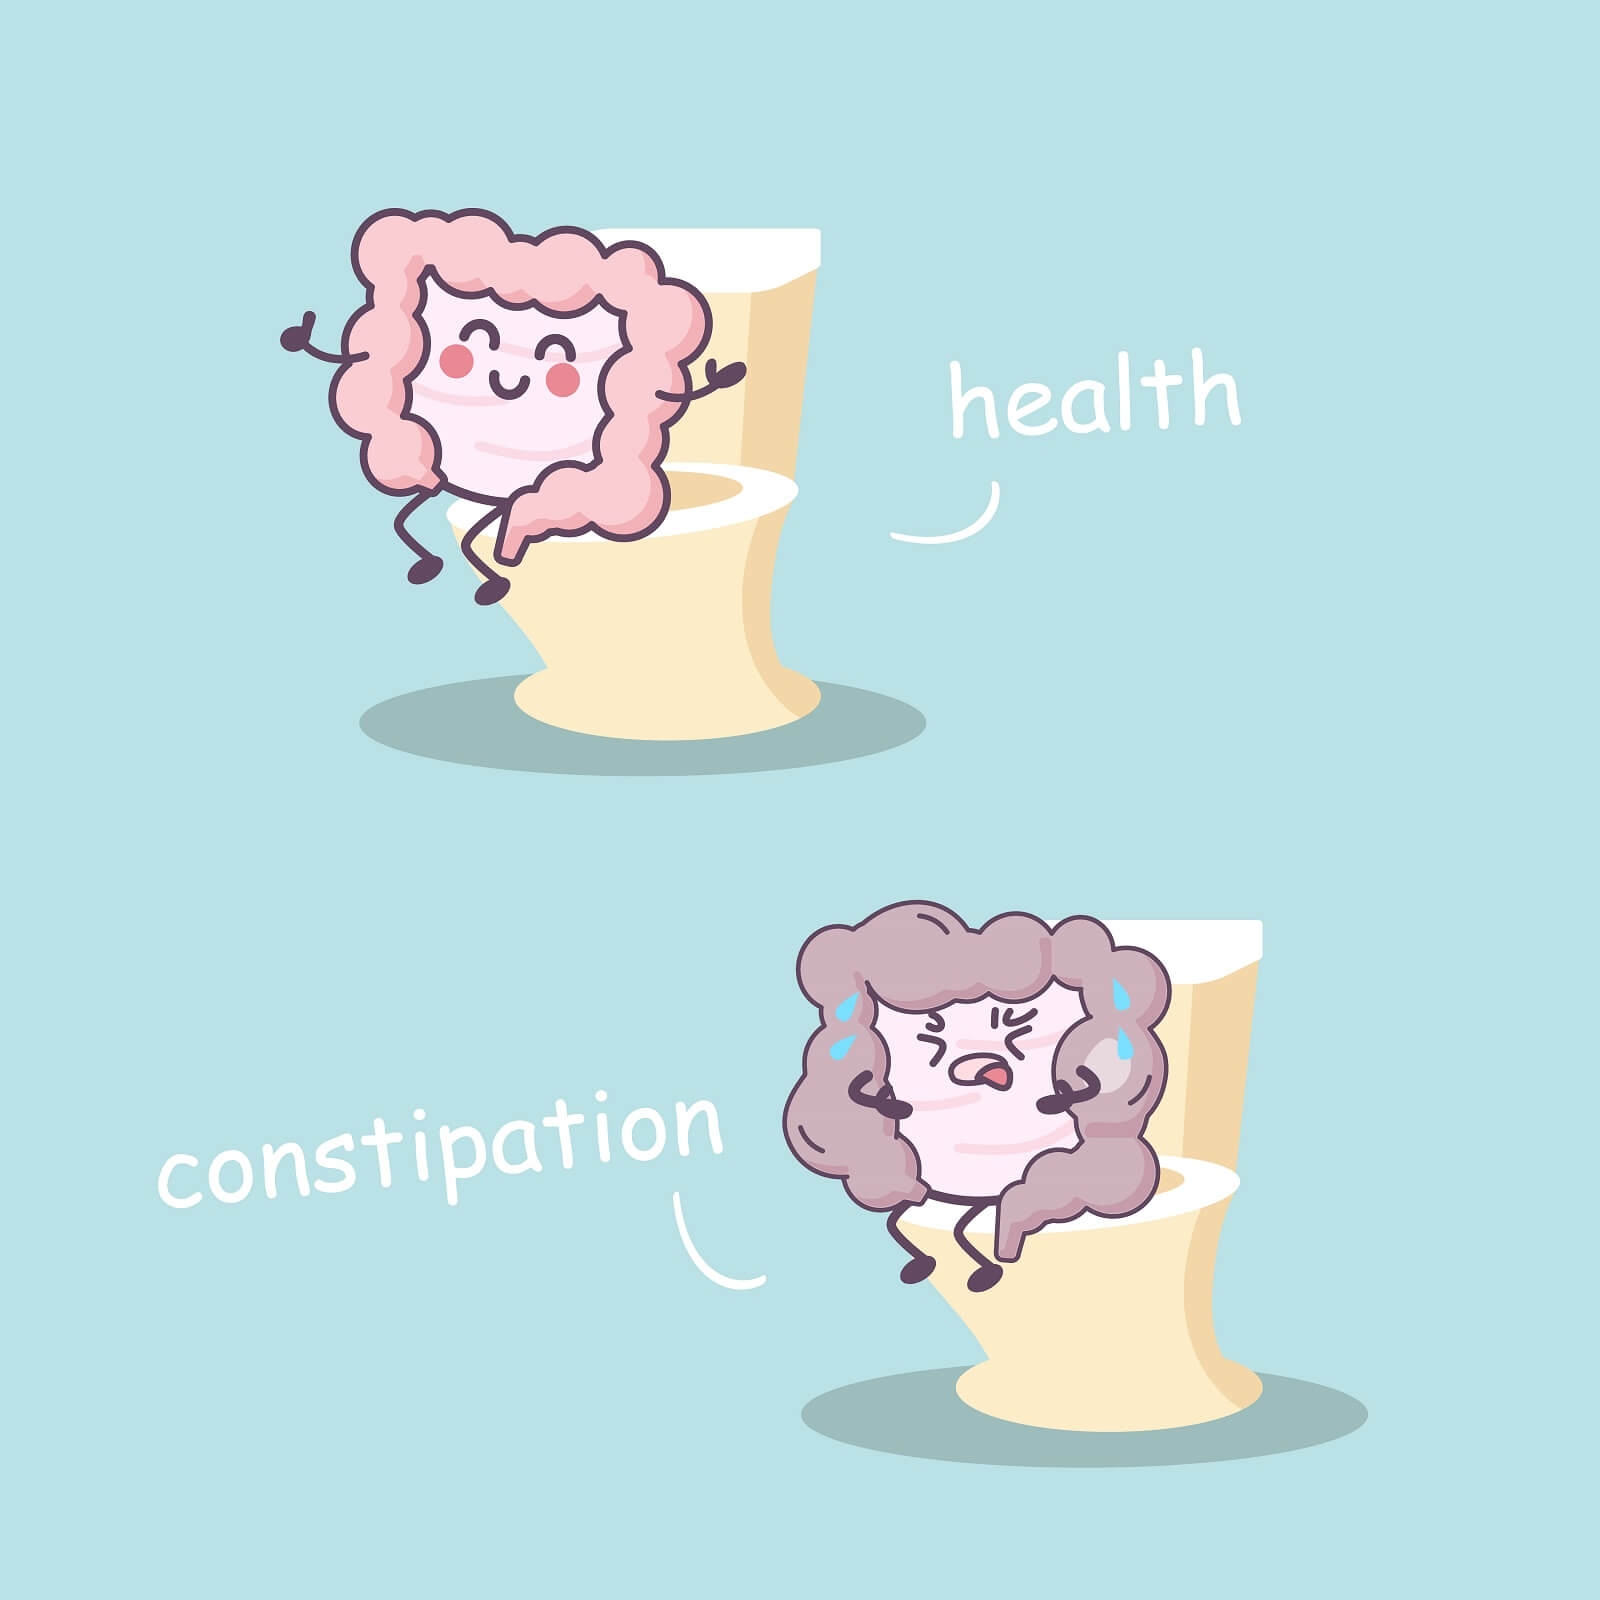 Cartoon of healthy intestine versus a constipated intestine.